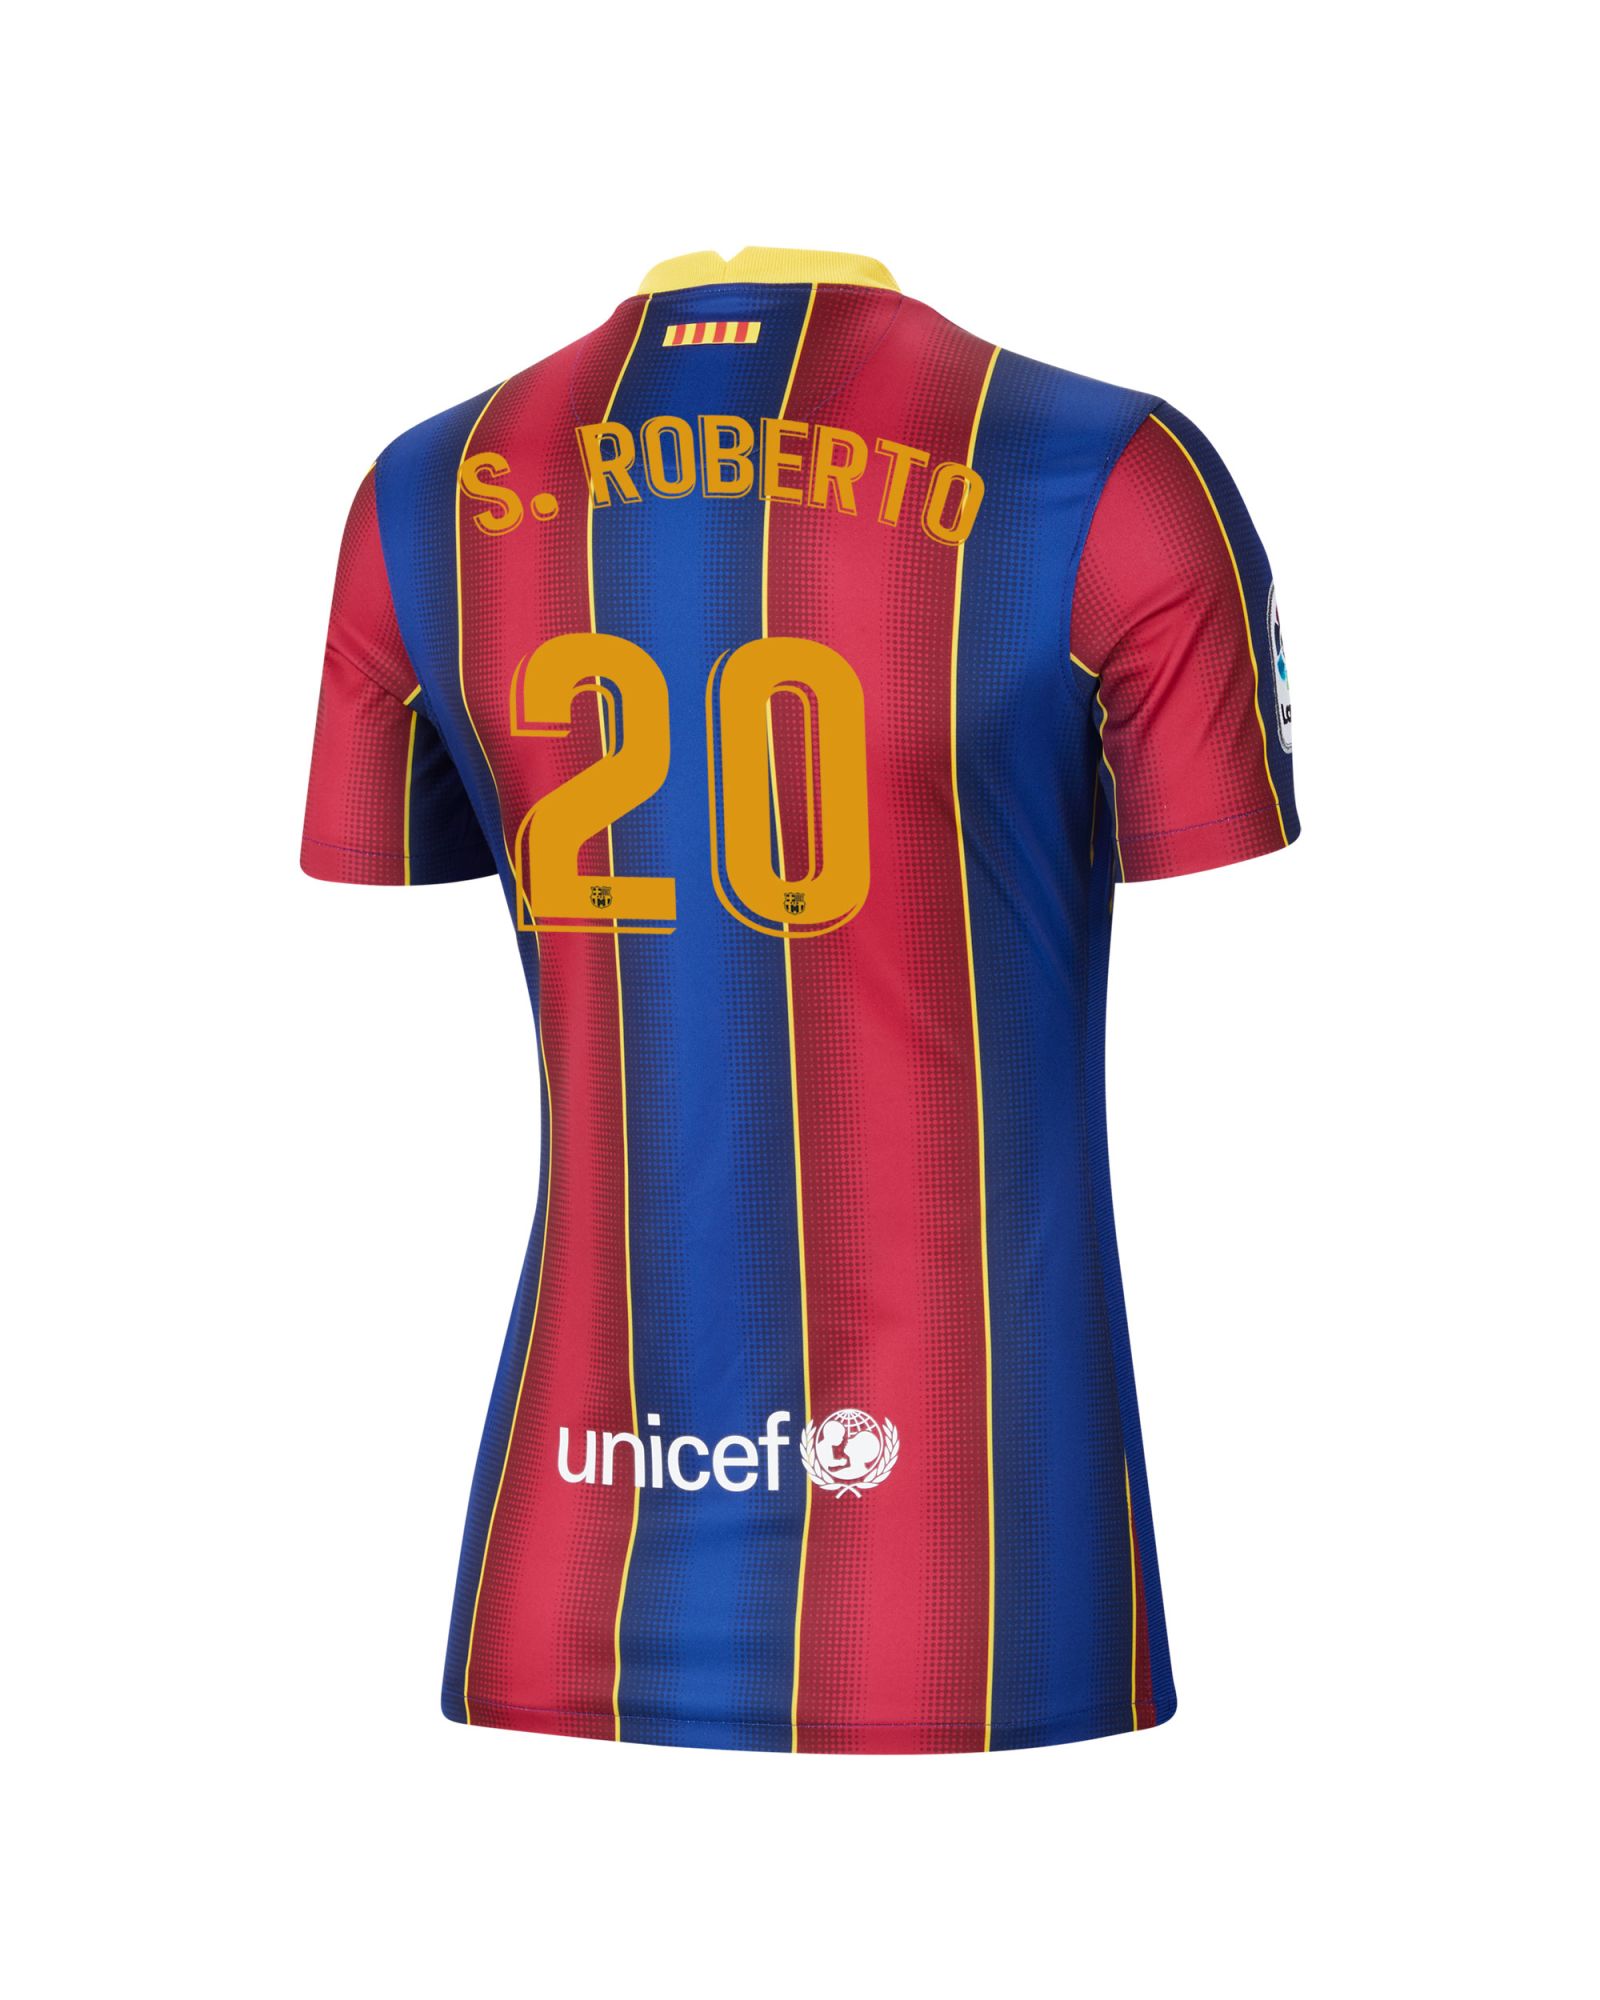 Camiseta 1ª FC Barcelona 2020/2021 Mujer  S. Roberto - Fútbol Factory